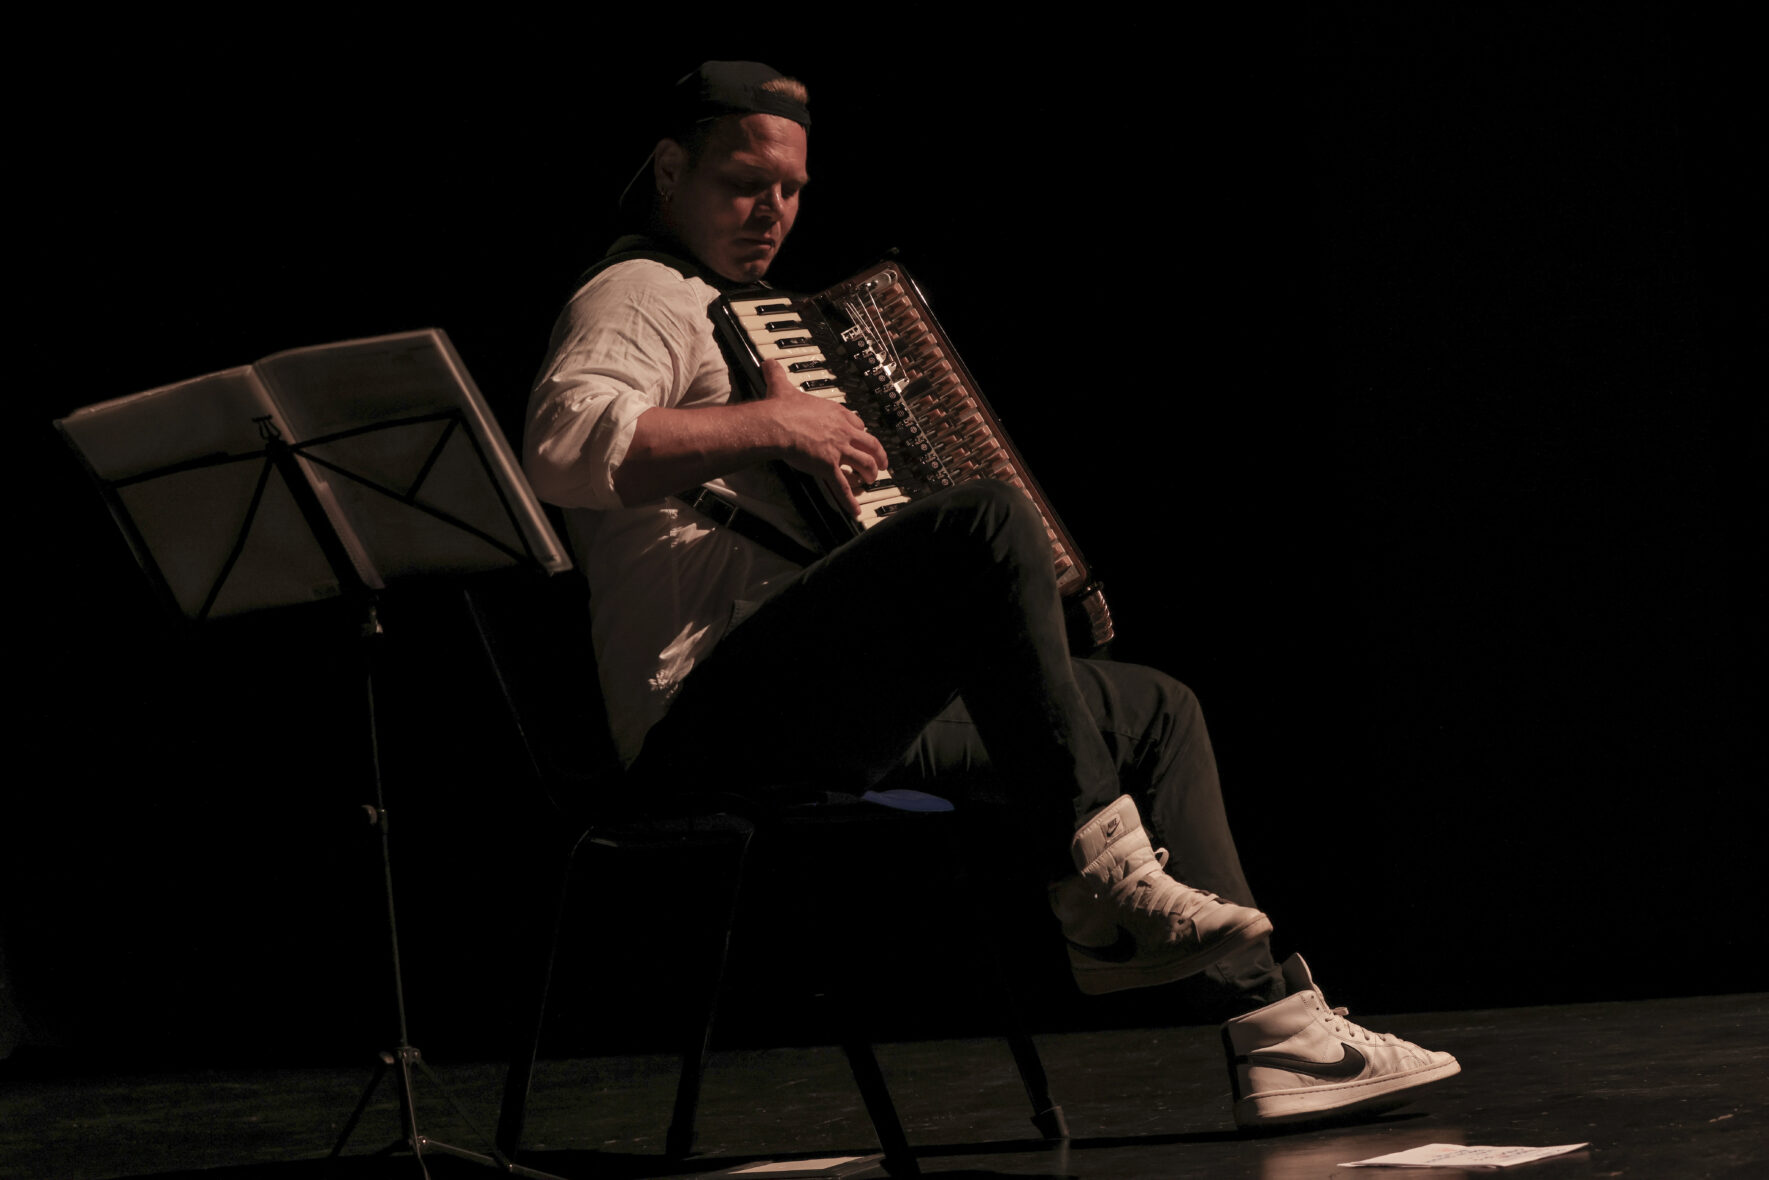 Davide Rocco Fiorenza: "my perspective of the accordion sound" Davide 11